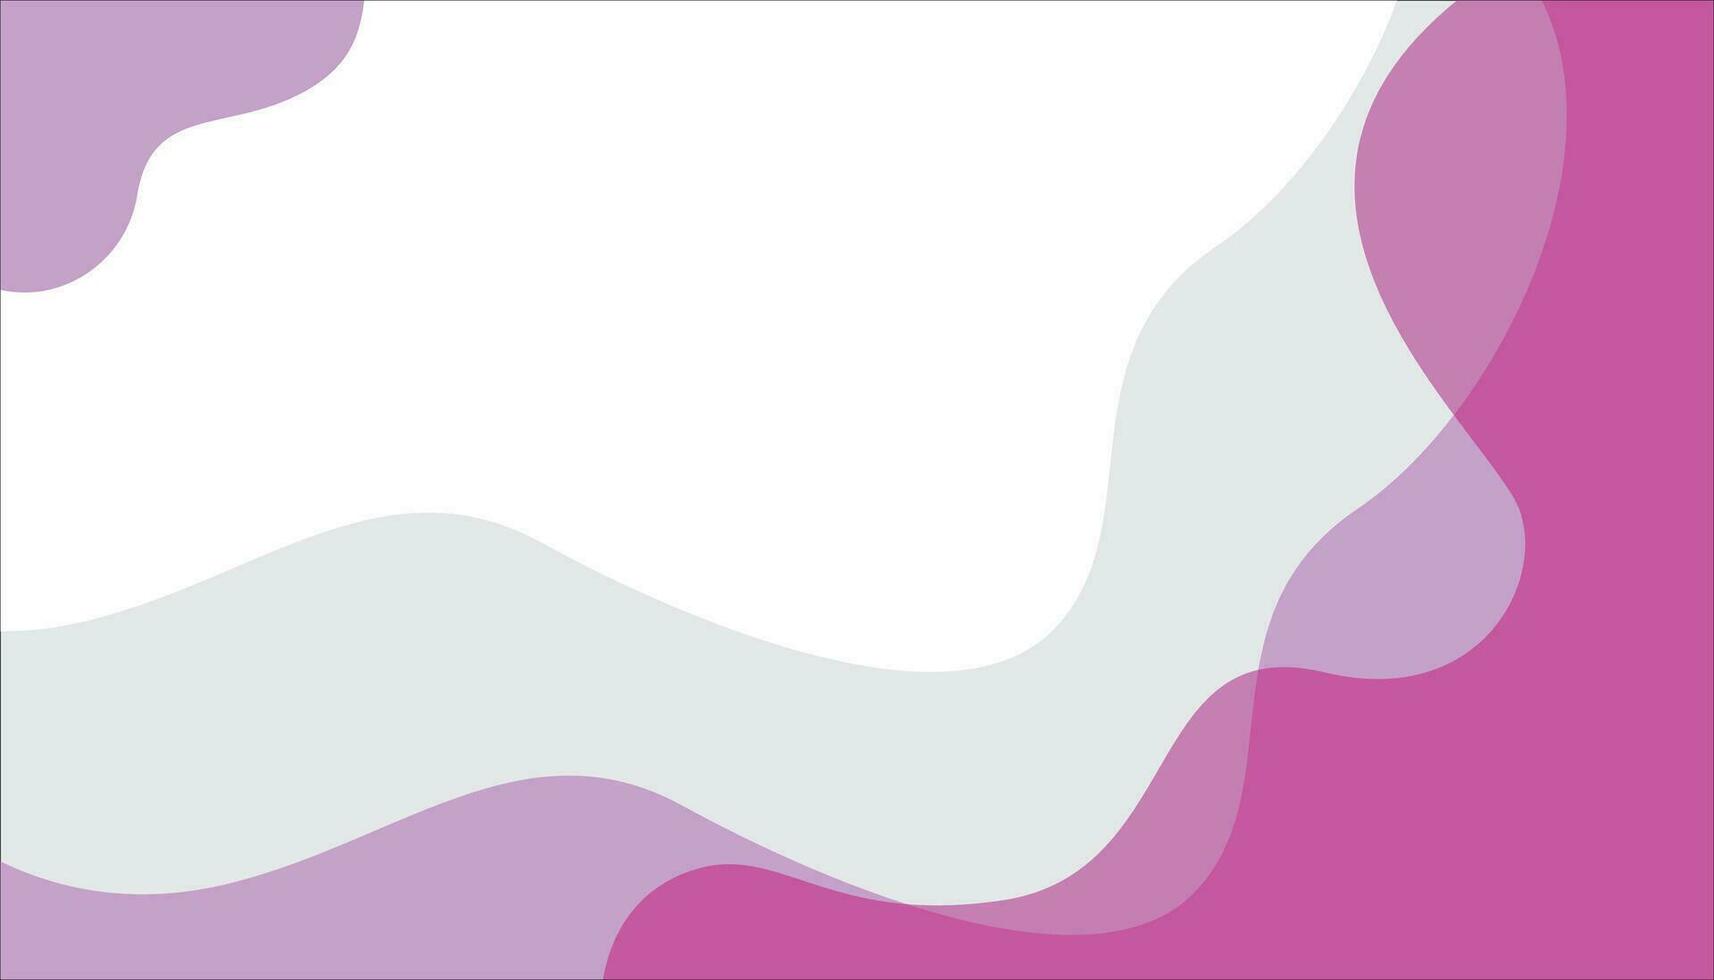 Aesthetic wave pink elegant background vector